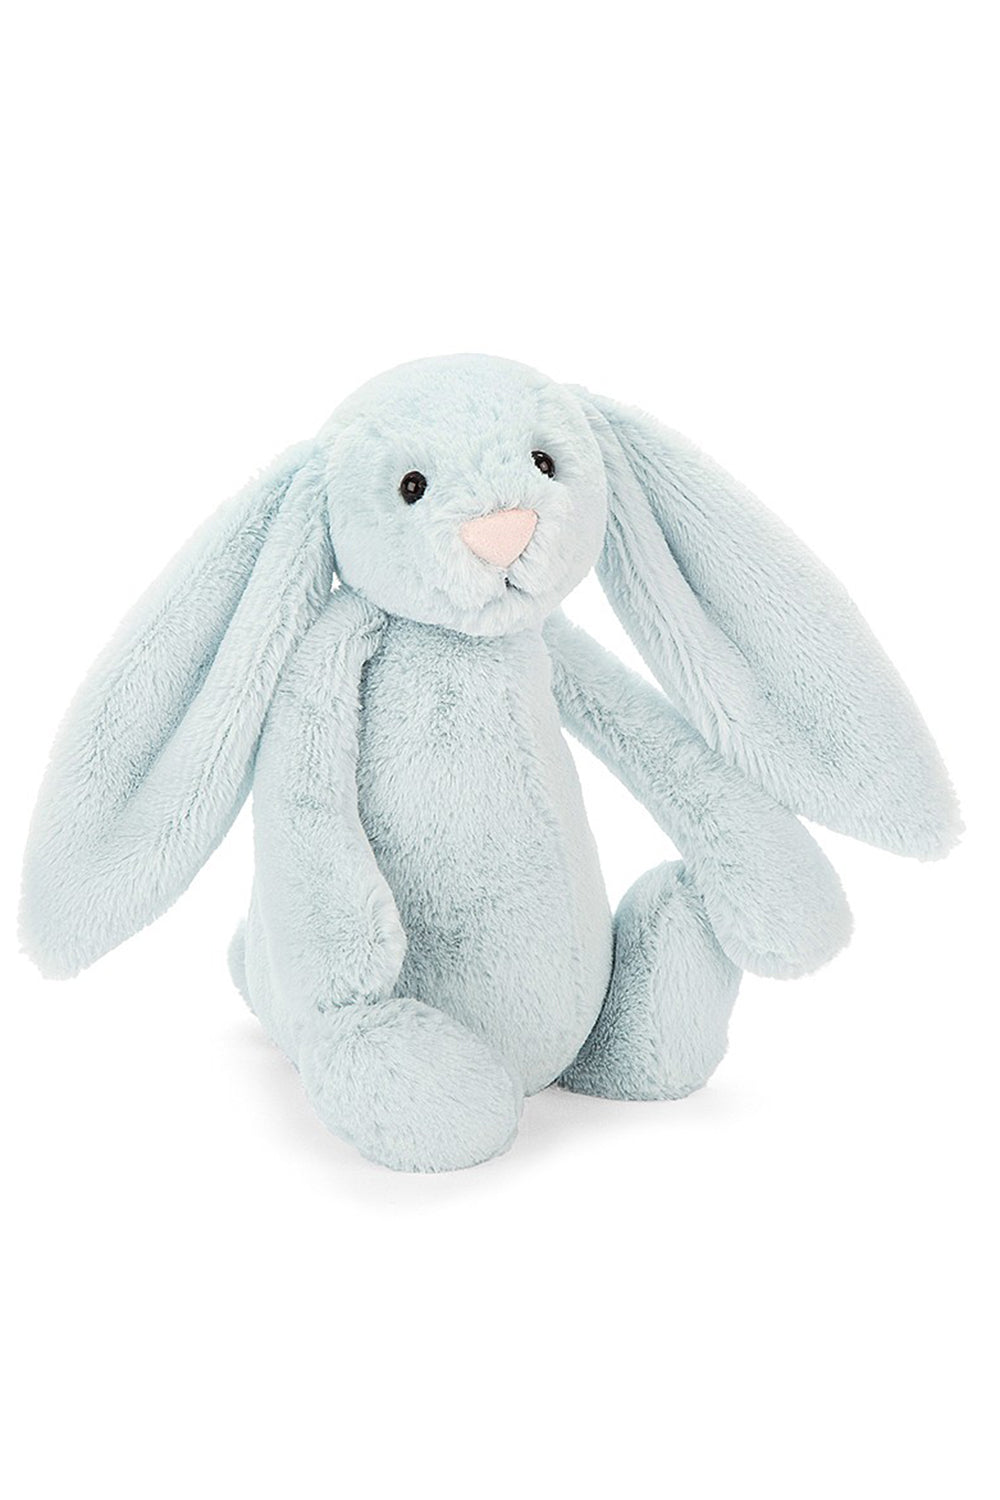 JELLYCAT Bashful Bunny - Beau Blue